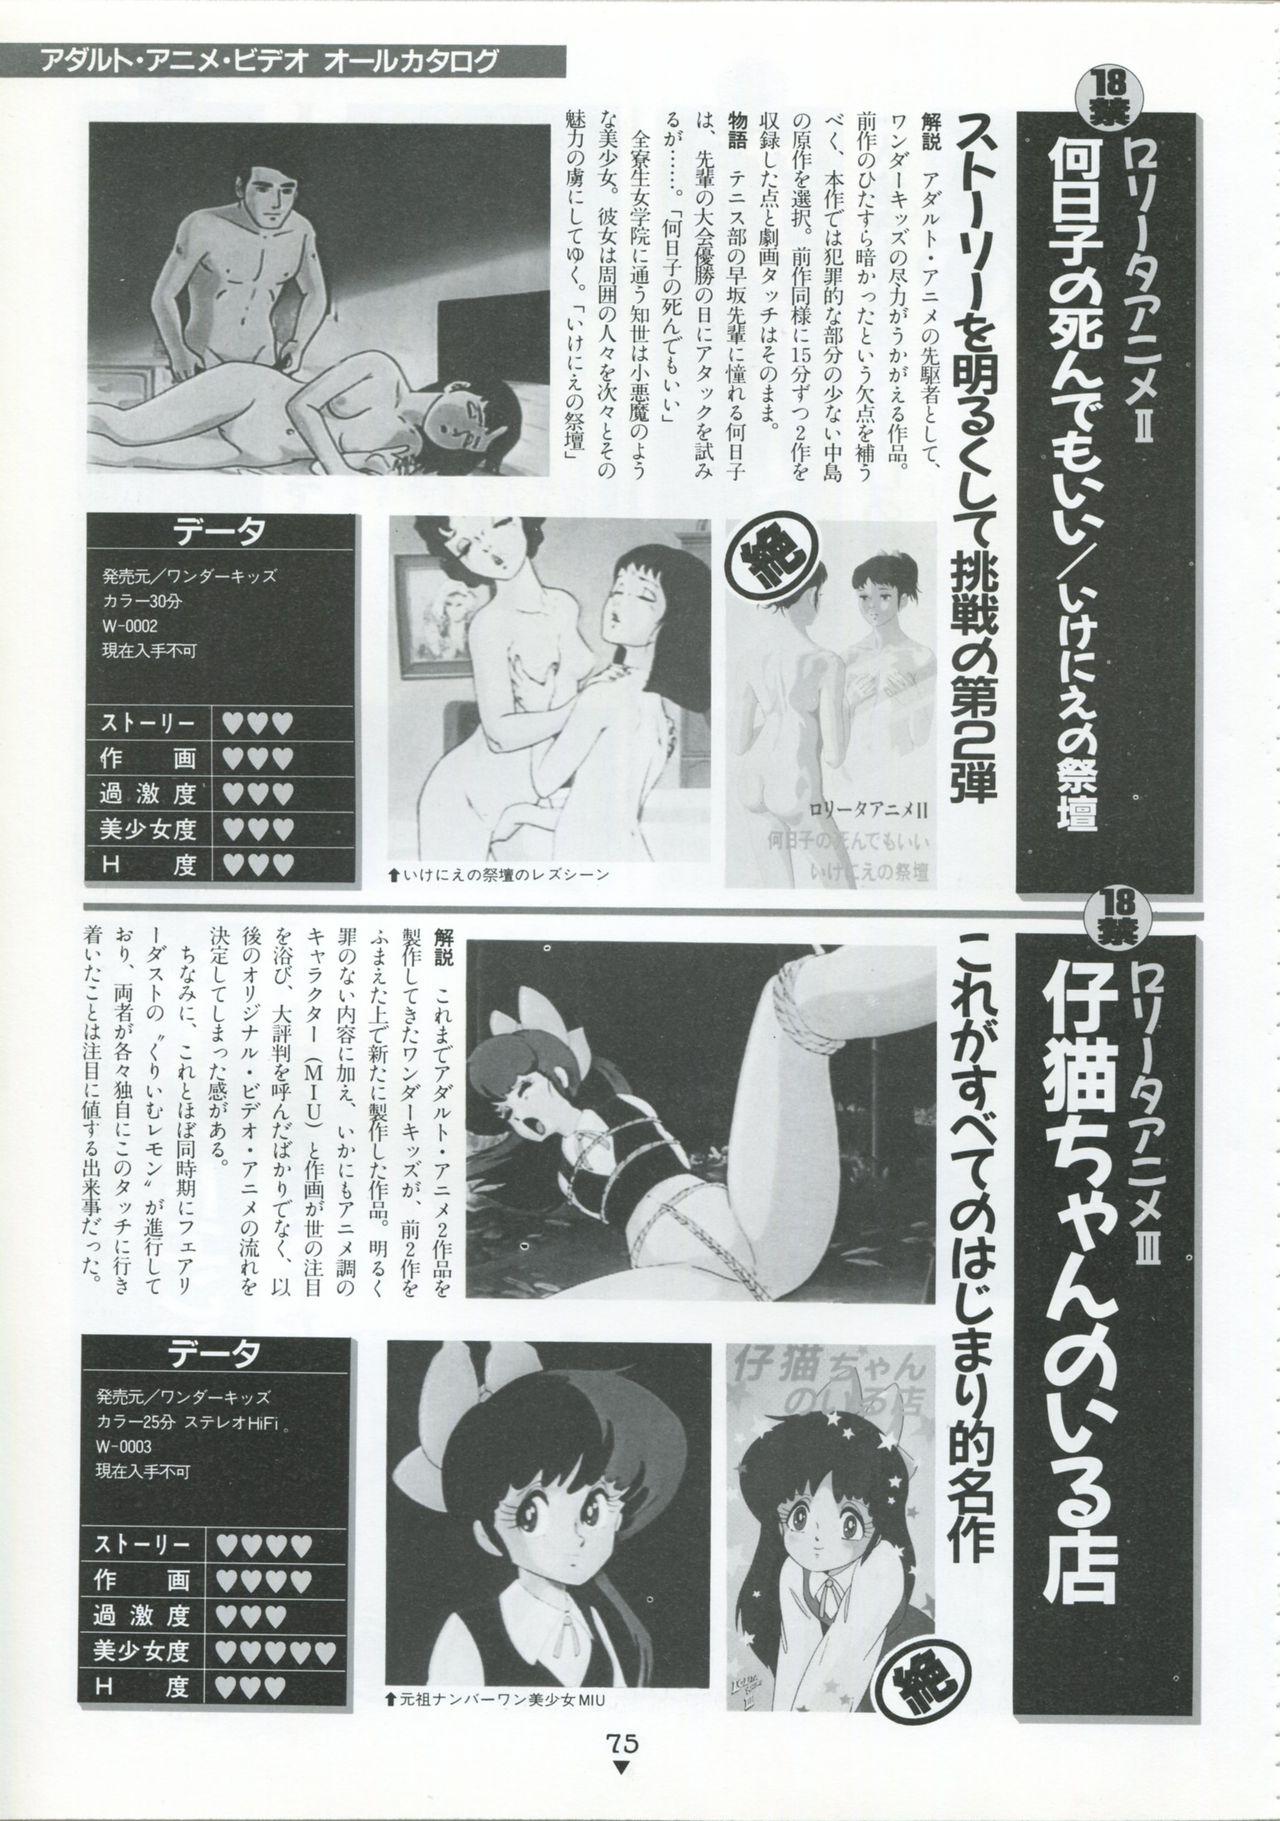 Bishoujo Anime Daizenshuu - Adult Animation Video Catalog 1991 70